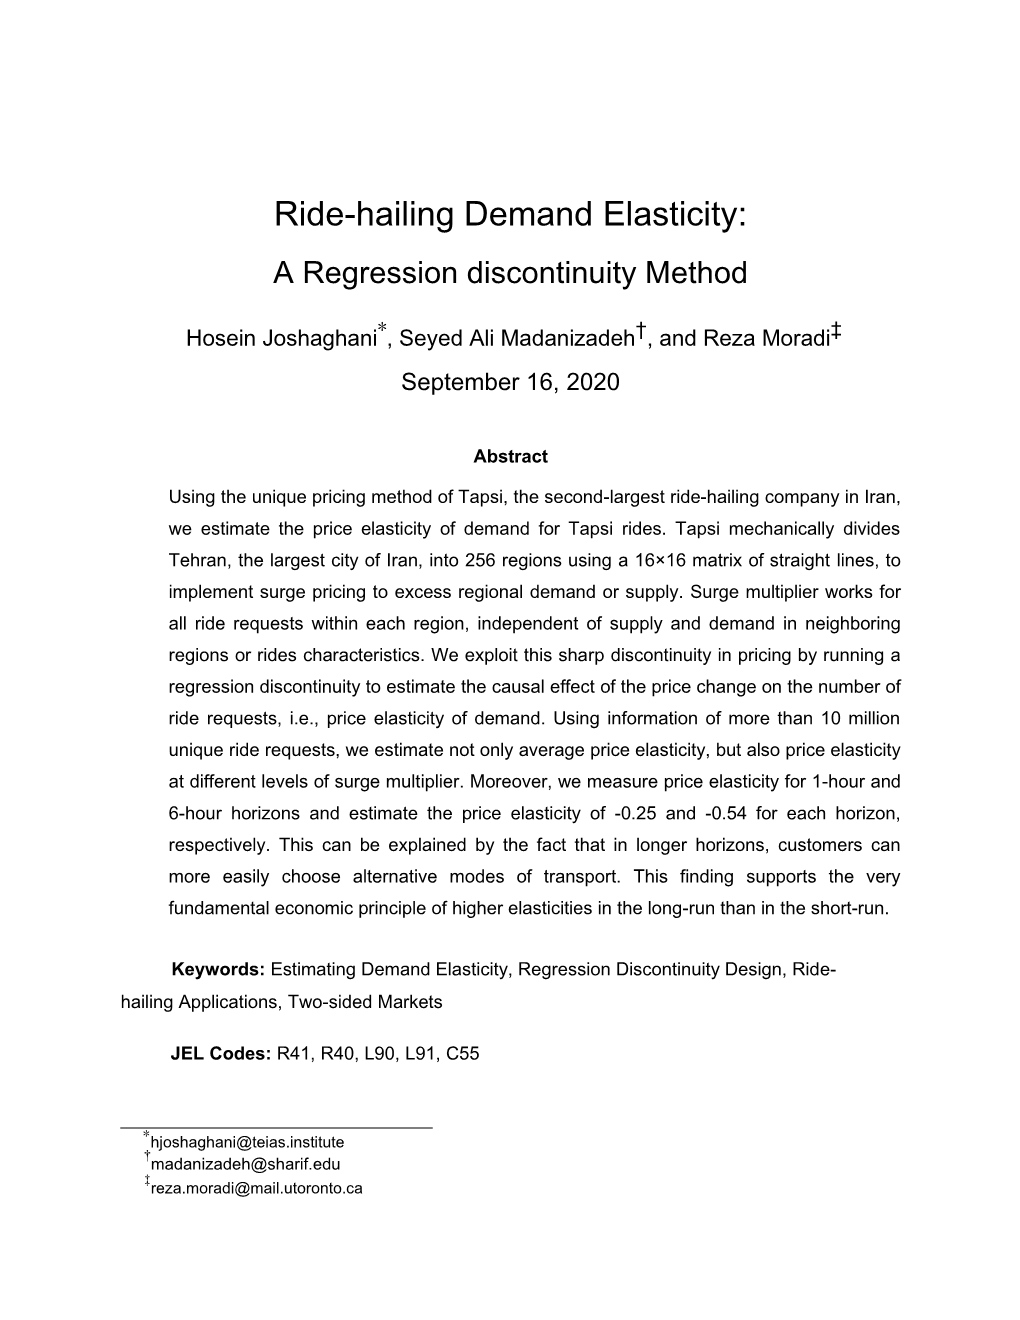 Ride-Hailing Demand Elasticity: a Regression Discontinuity Method